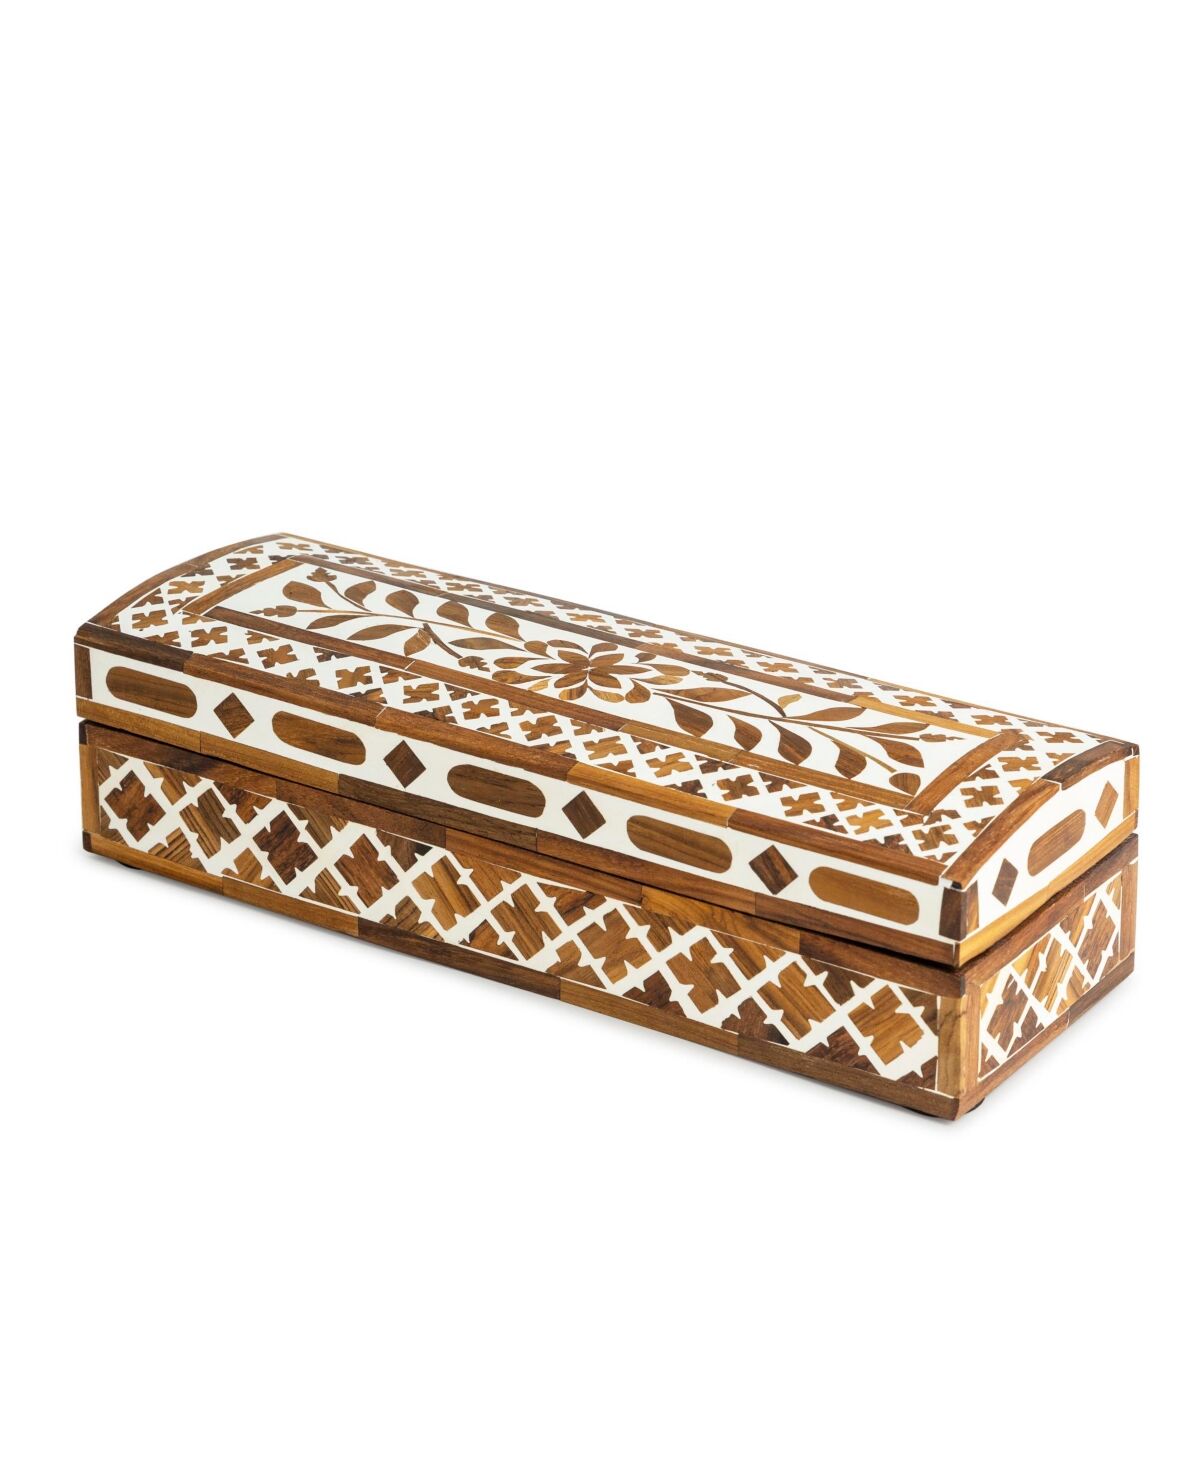 Gauri Kohli Jodhpur Wood Inlay Decorative Jewelry Box, Small - Brown